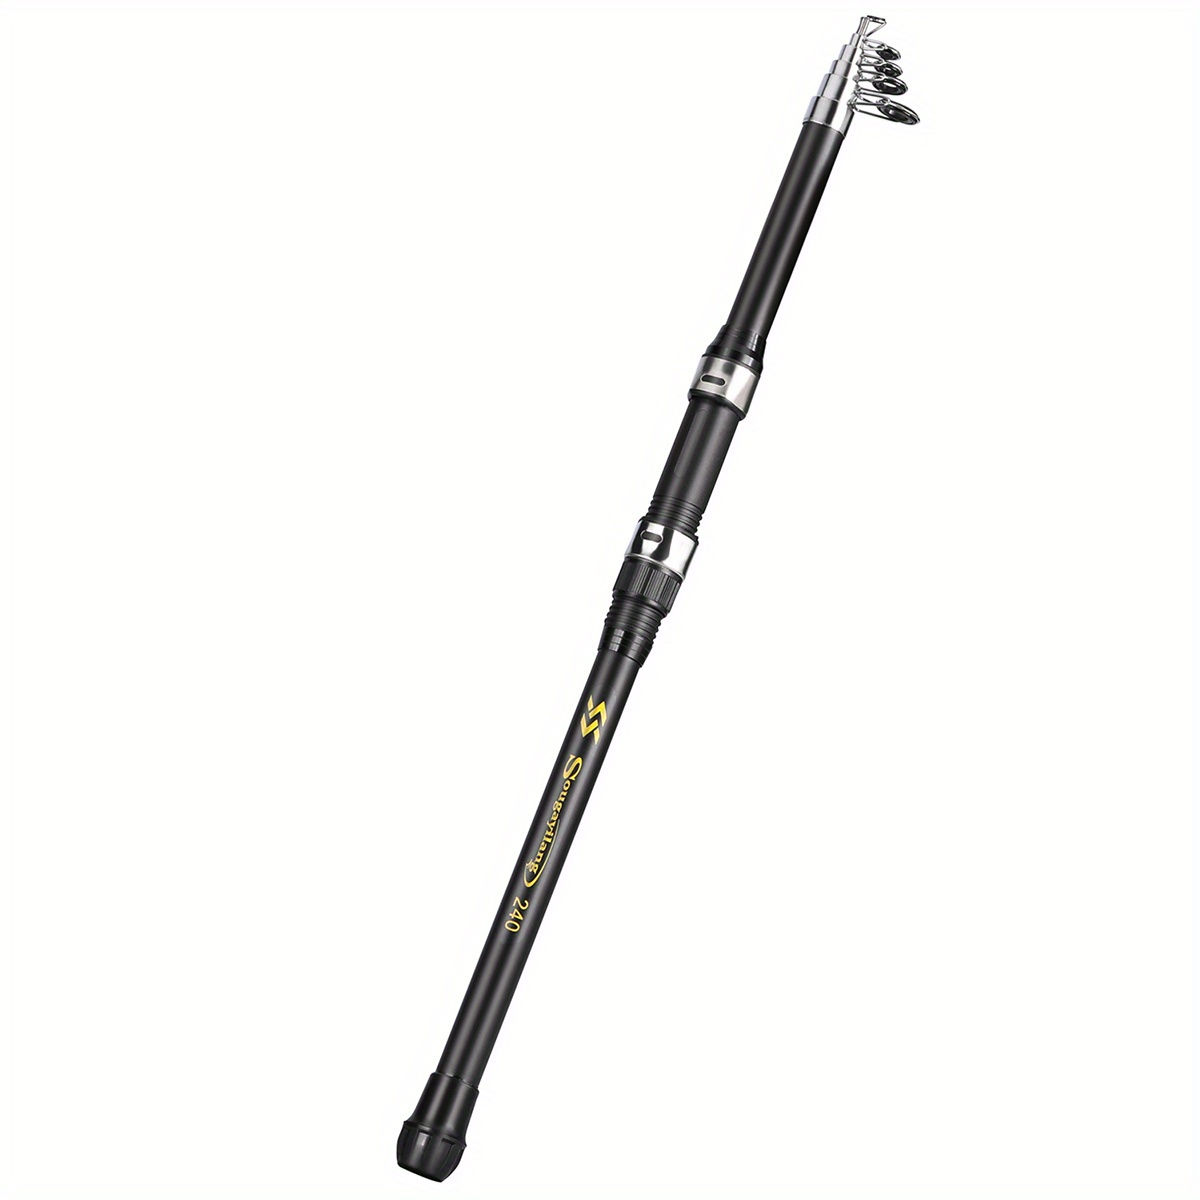 Sougayilang Super Light Durable Telescopic Fishing Rod, Black